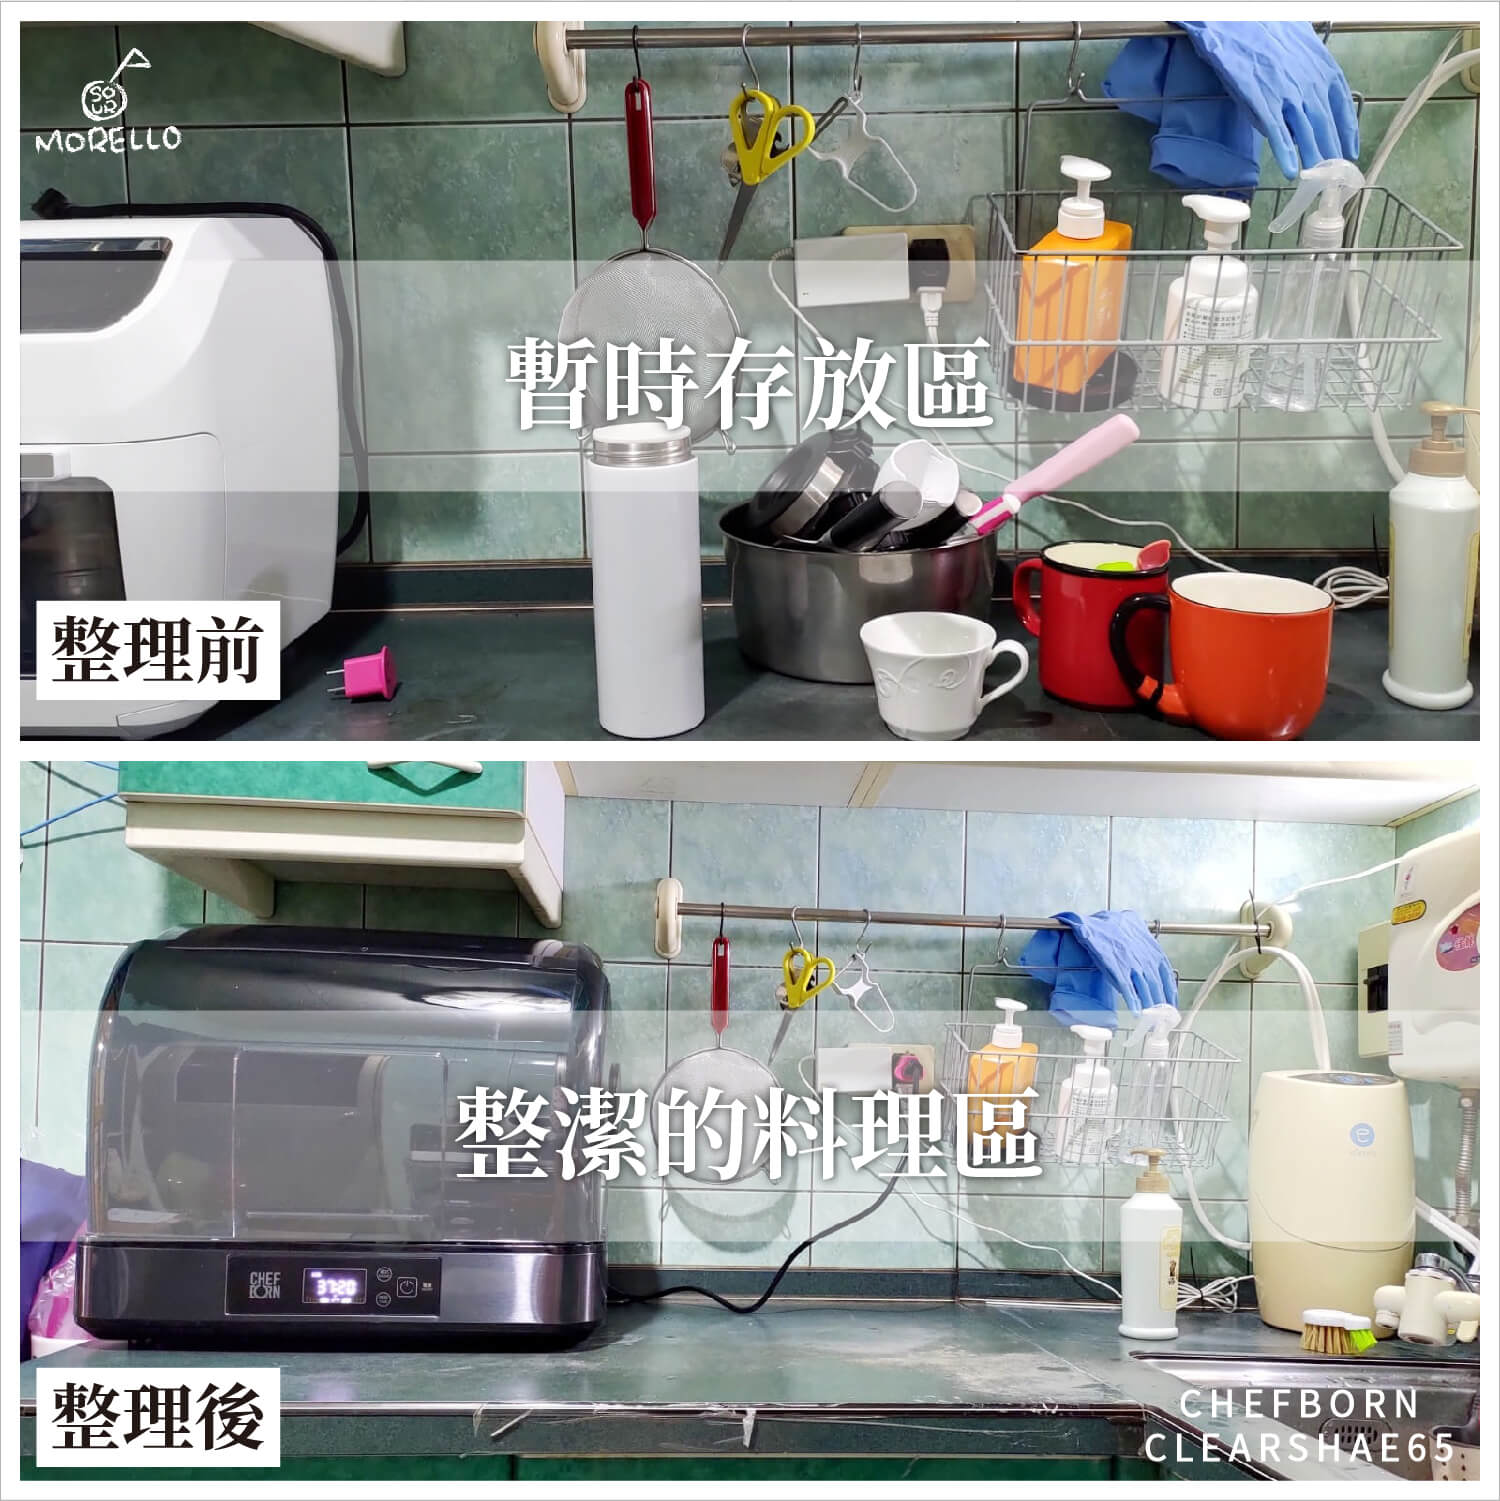 【CHEFBORN】CLEARSHAE65 雙重殺菌 烘碗機 的體積恰巧可以放在廚房櫃子中間，而先前擺放的氣炸烤箱則改放在鐵架上，有需要時才搬到檯面上使用。